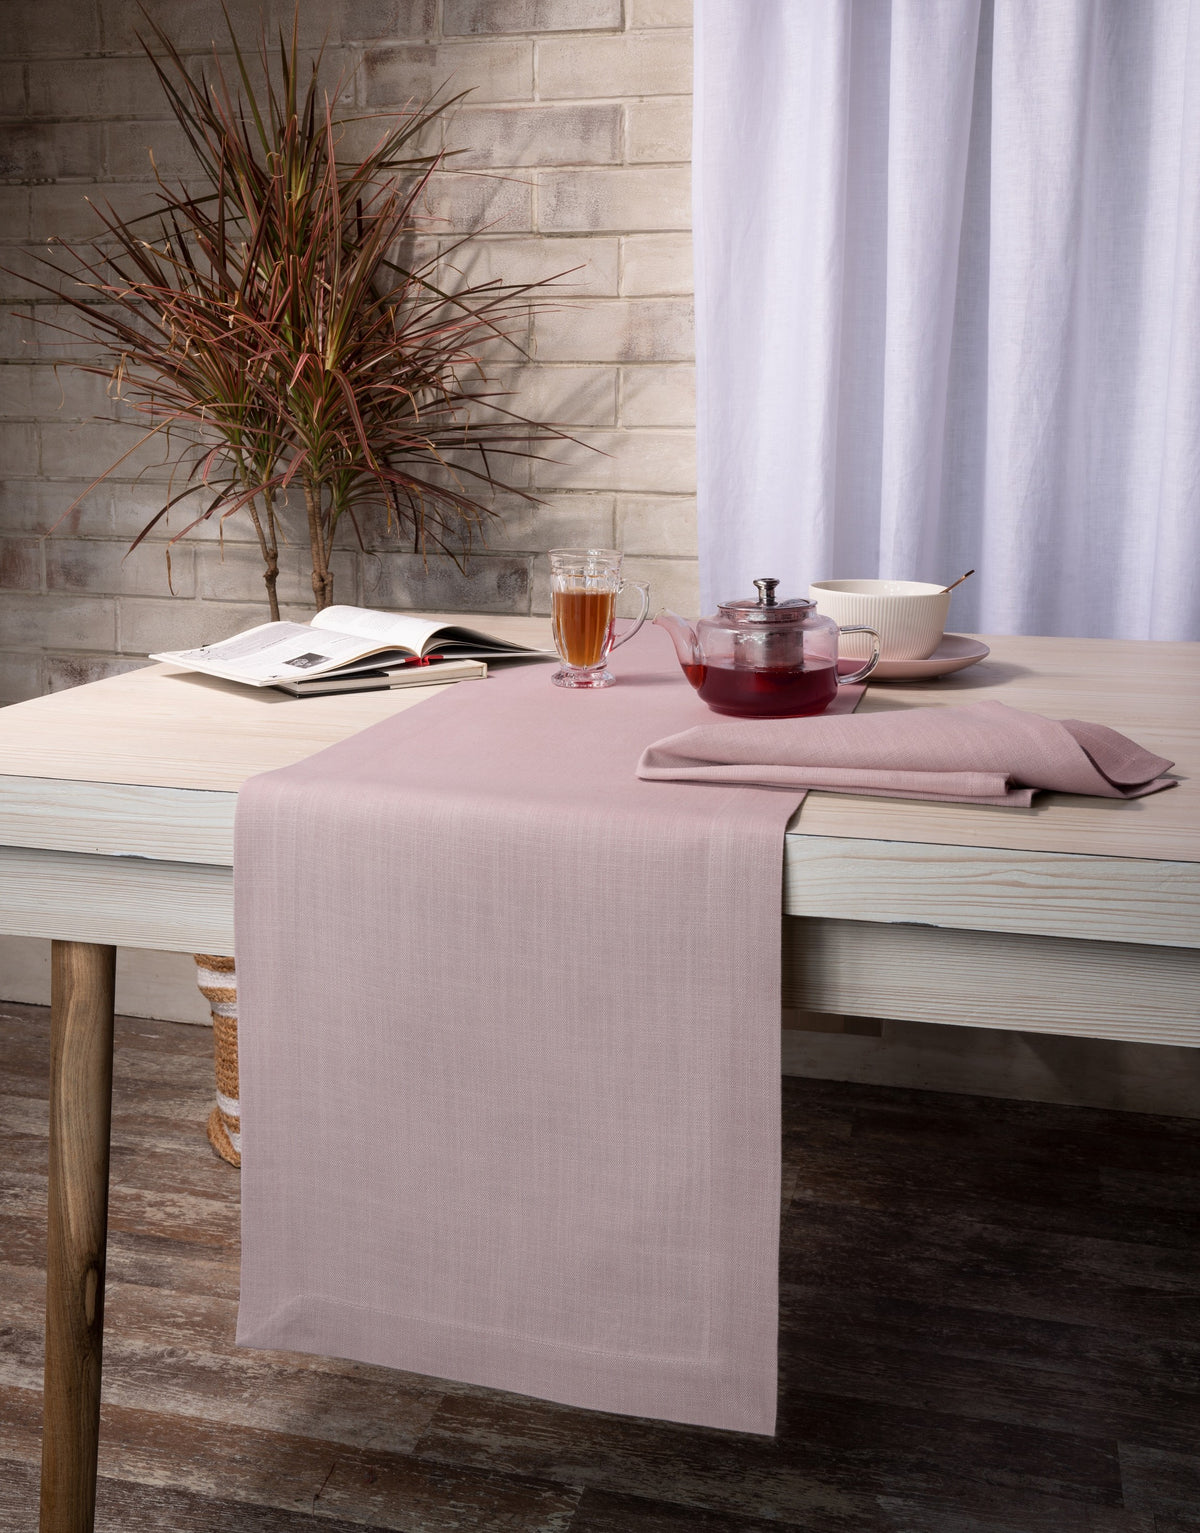 Beige Linen Textured Table Runner - Mitered Corner